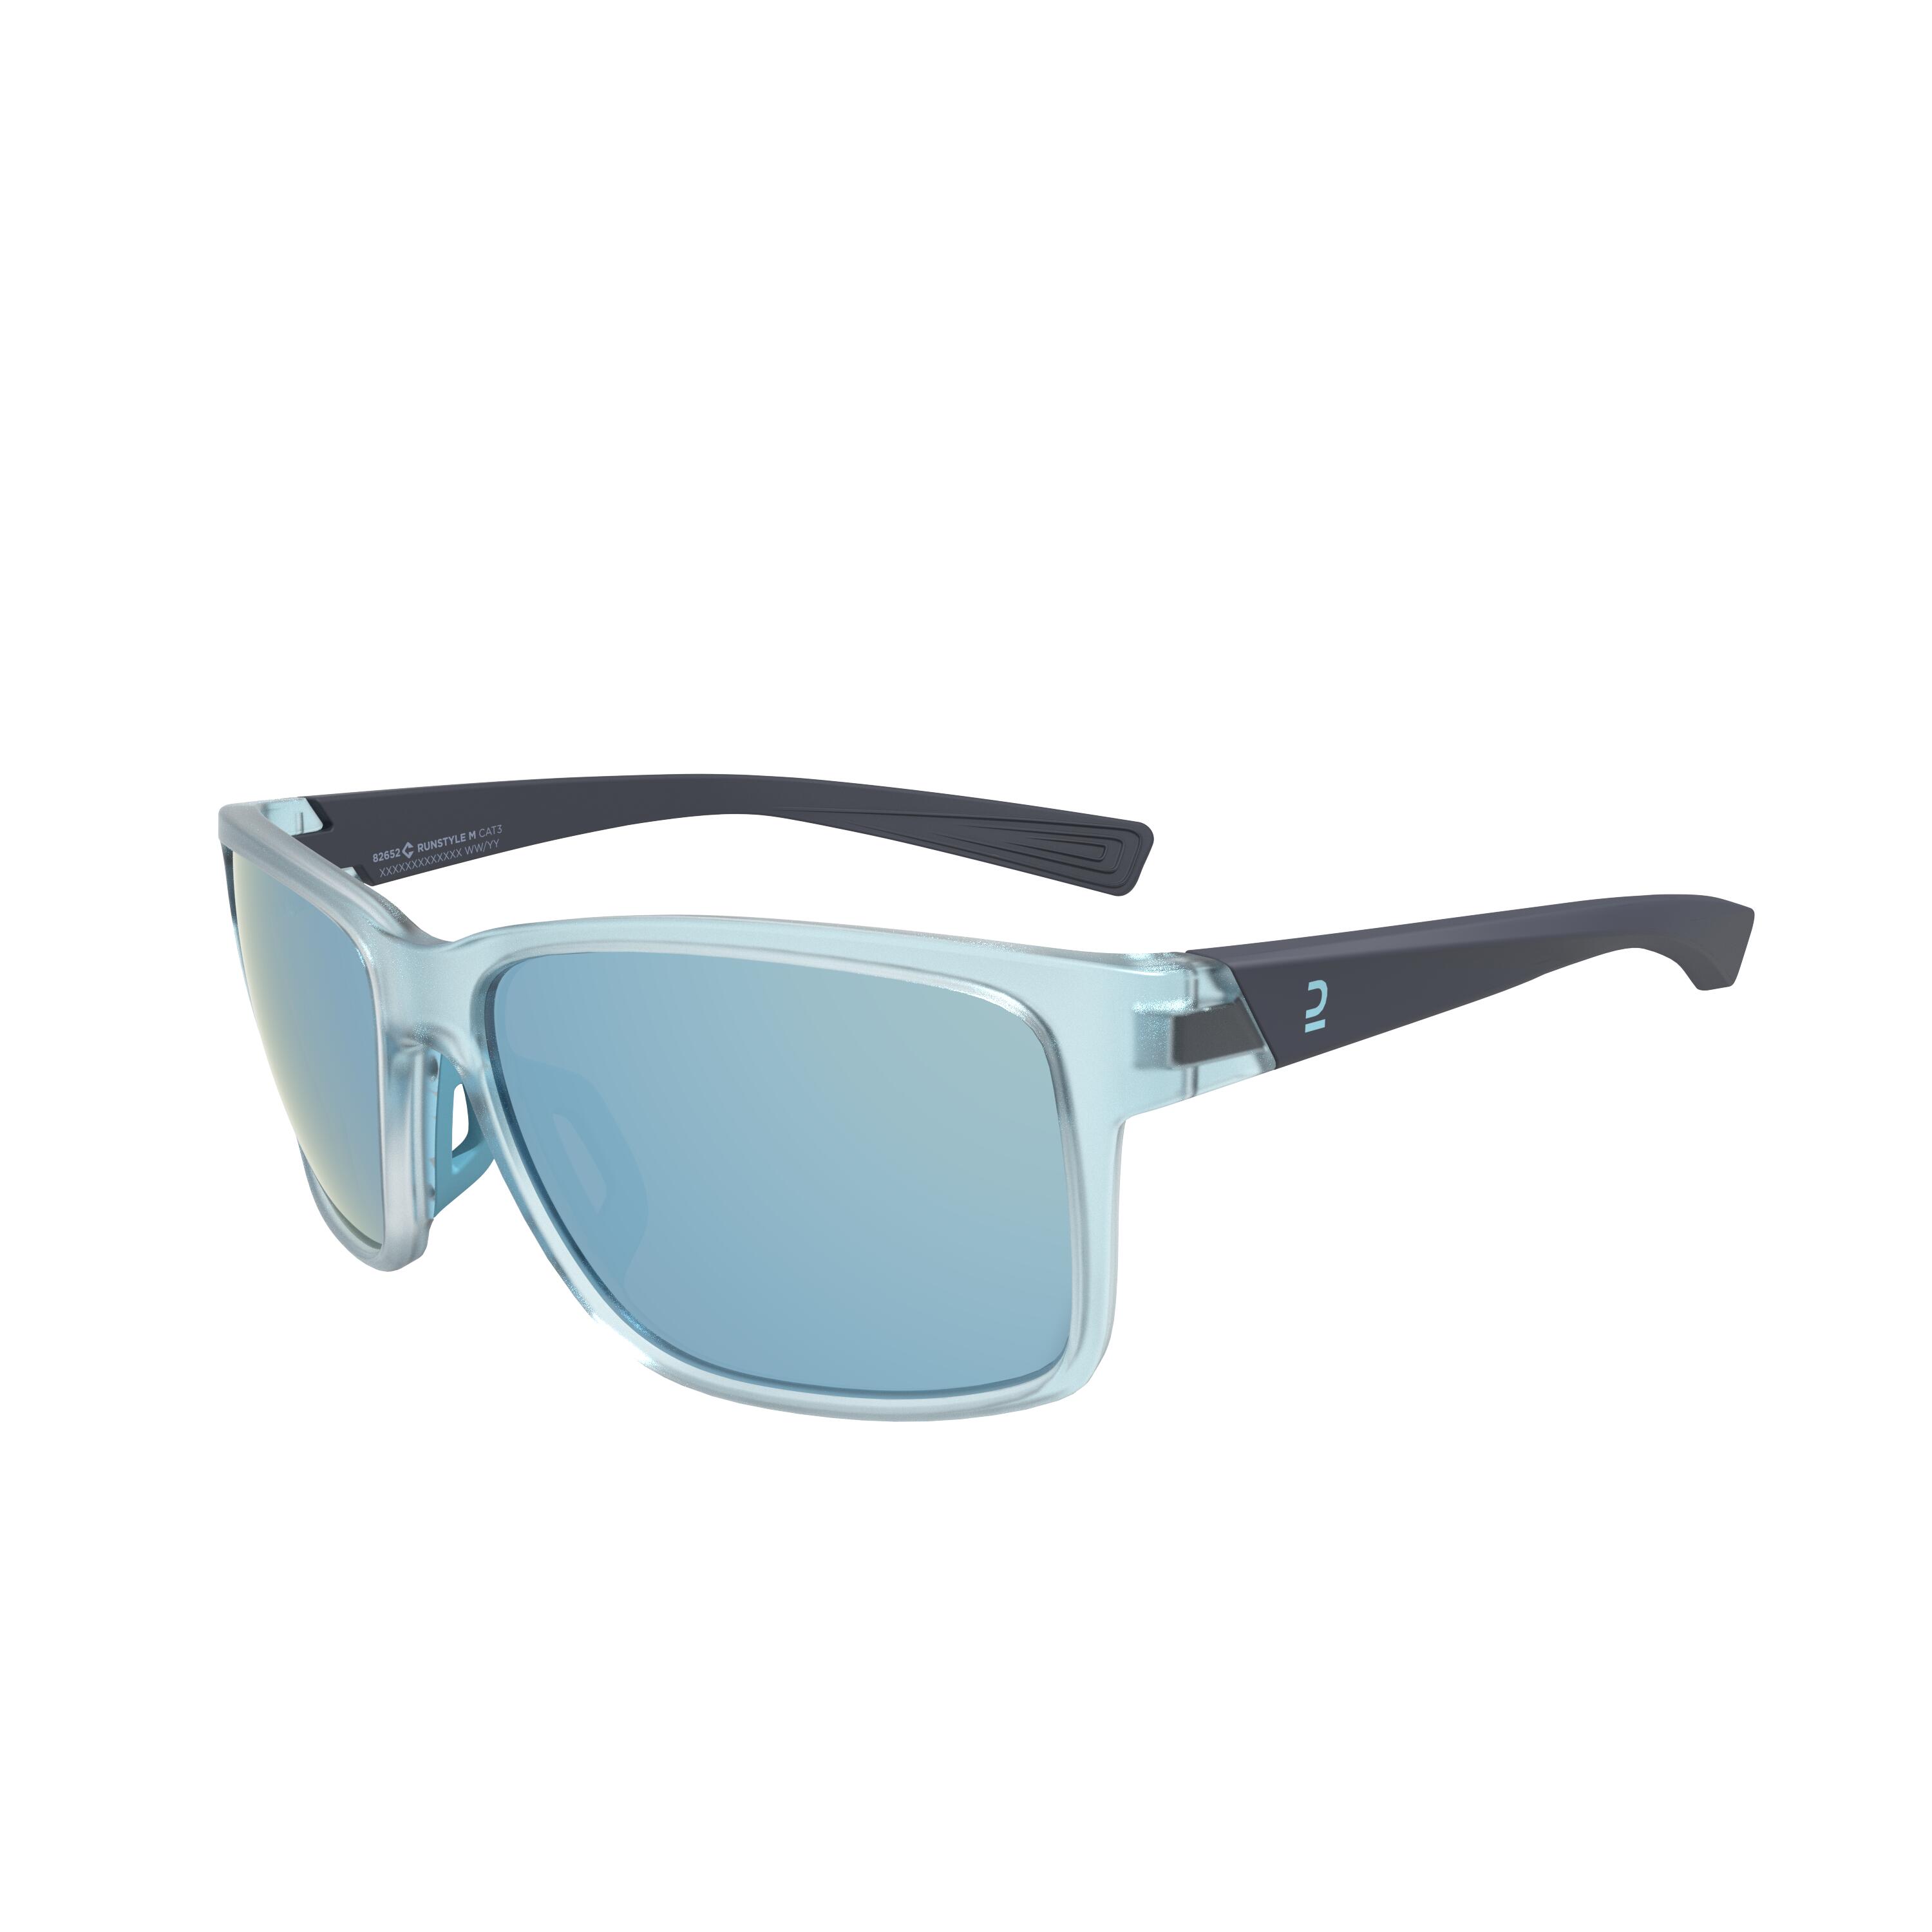 KALENJI Runstyle 2 Adult Running Glasses Category 3 - Translucent blue